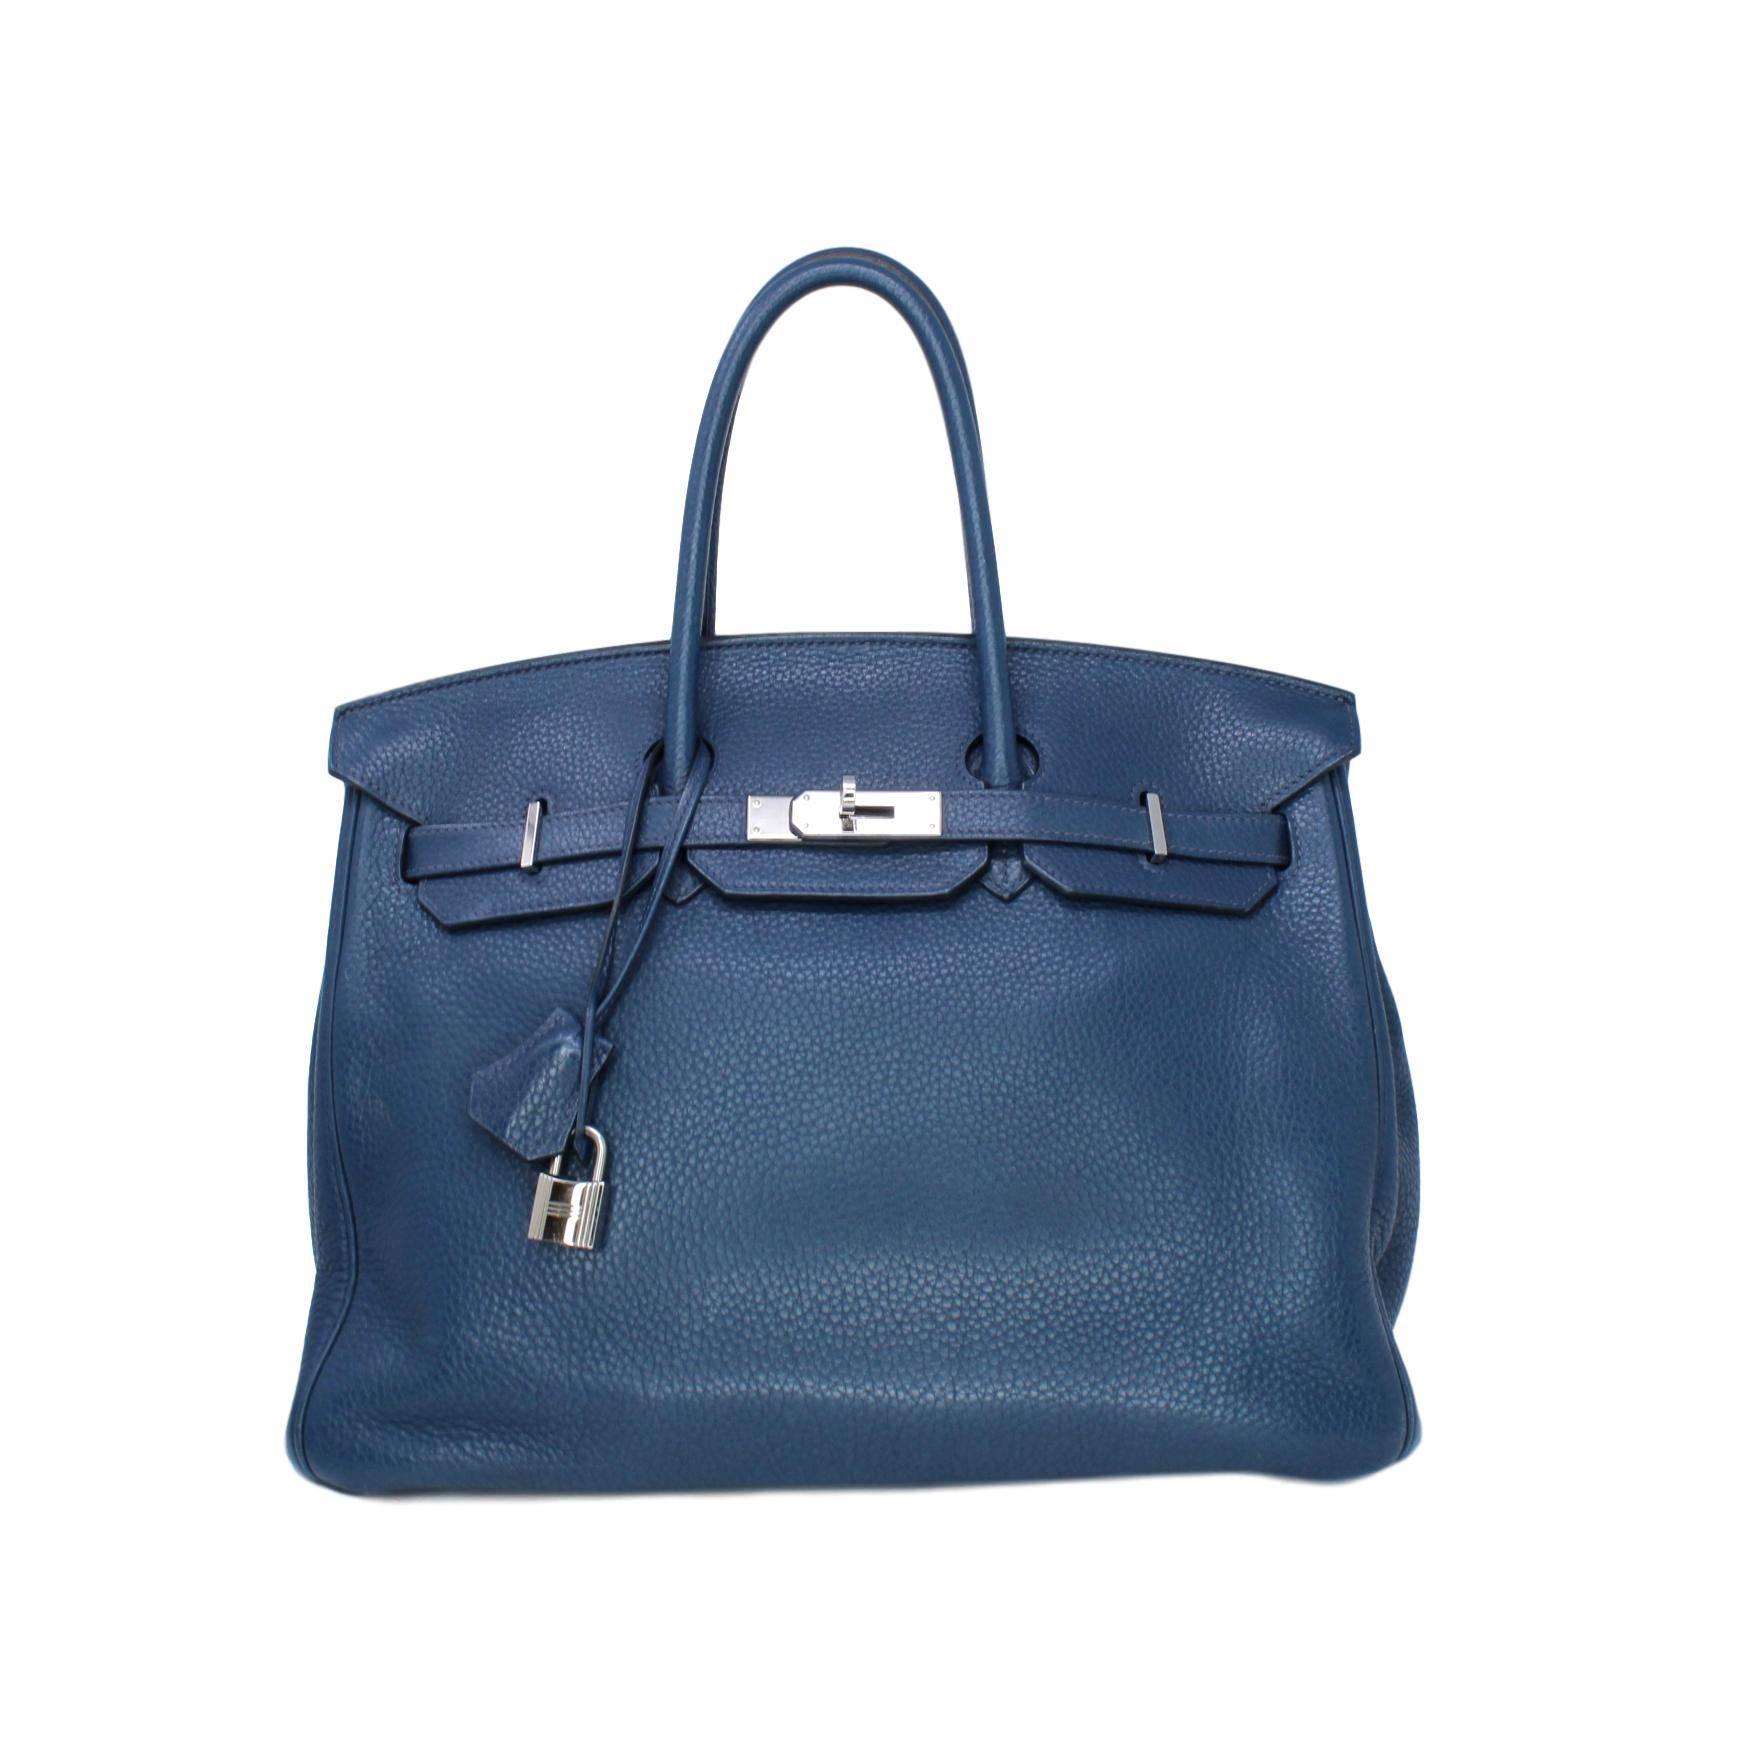 Best Cheap Replica Hermes Birkin 35cm Bag In Navy Blue